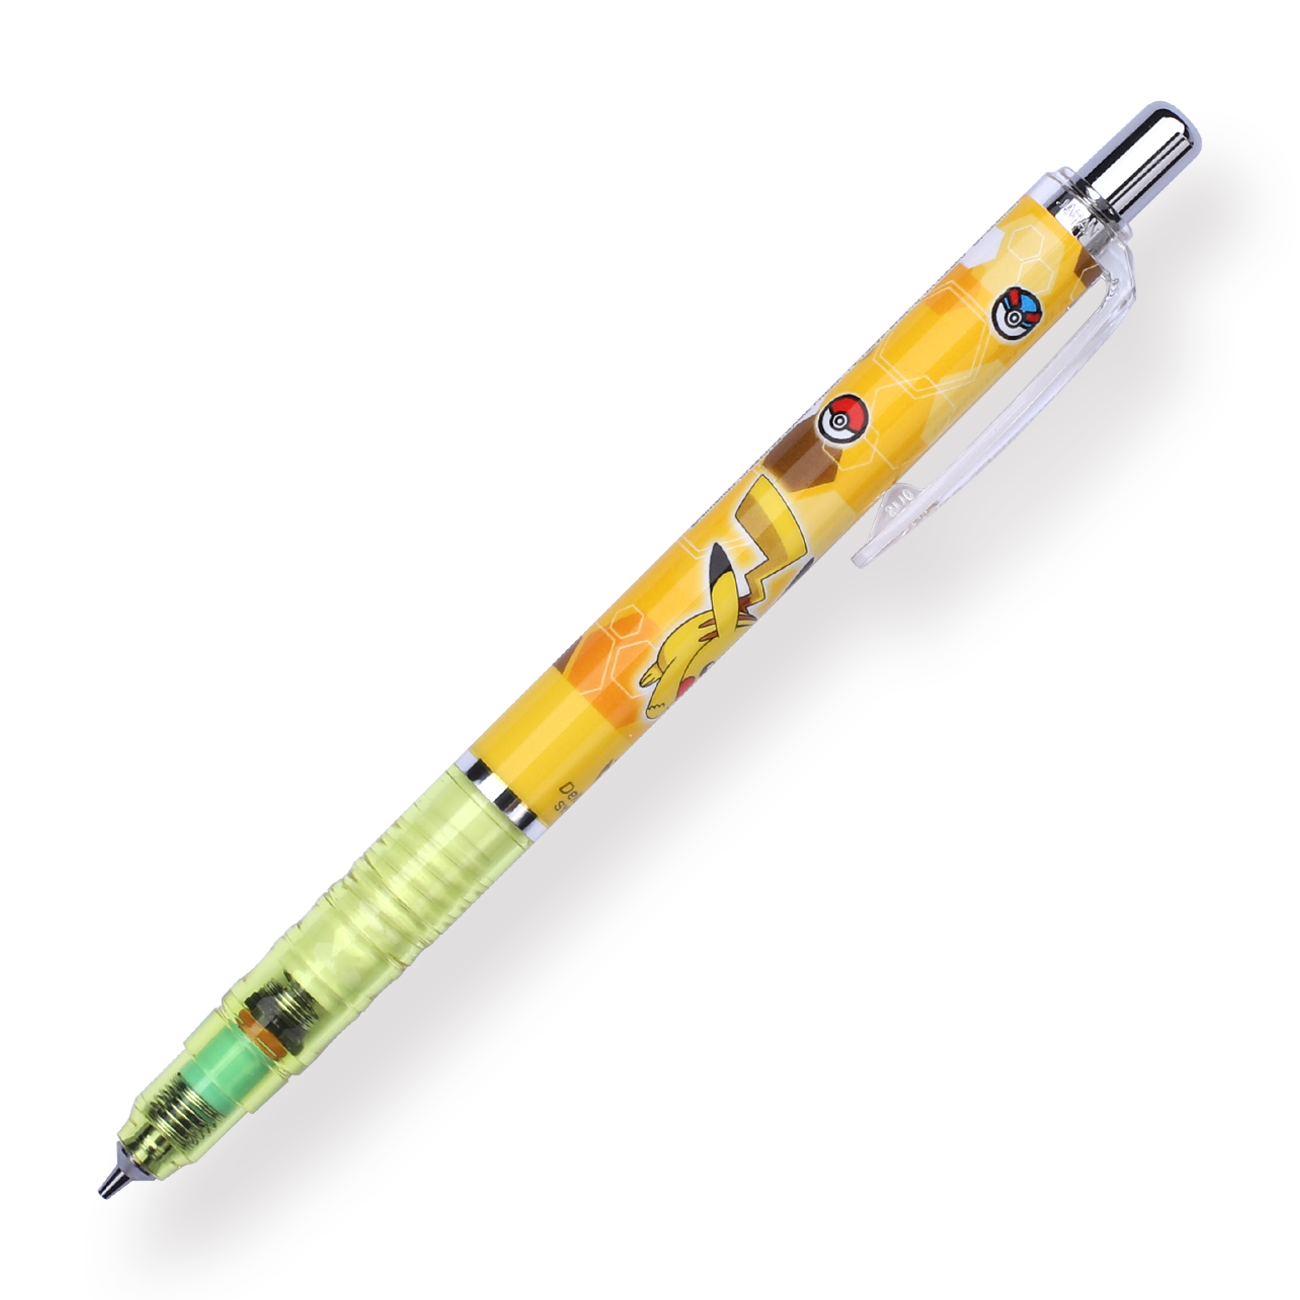 Zebra Delguard x Pokémon Limited Edition Mechanical Pencil - 0.5mm - Pikachu Yellow - Stationery Pal